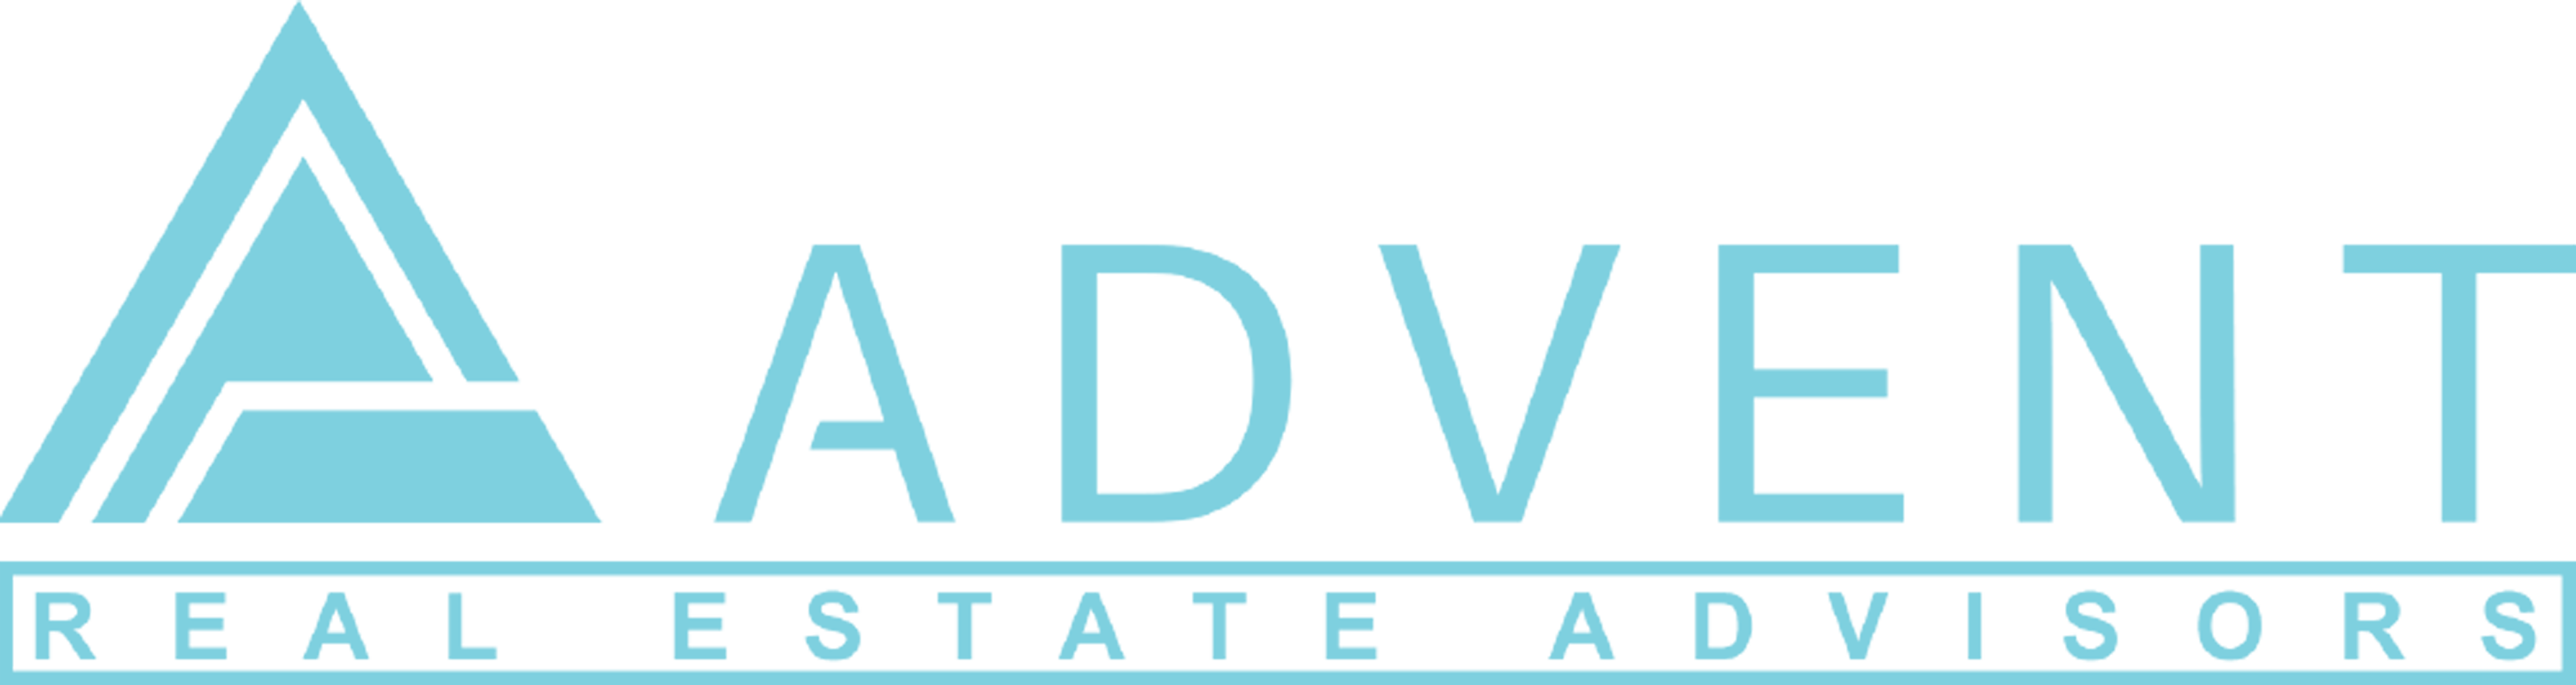 Properties | AREA - Advent Real Estate Advisors